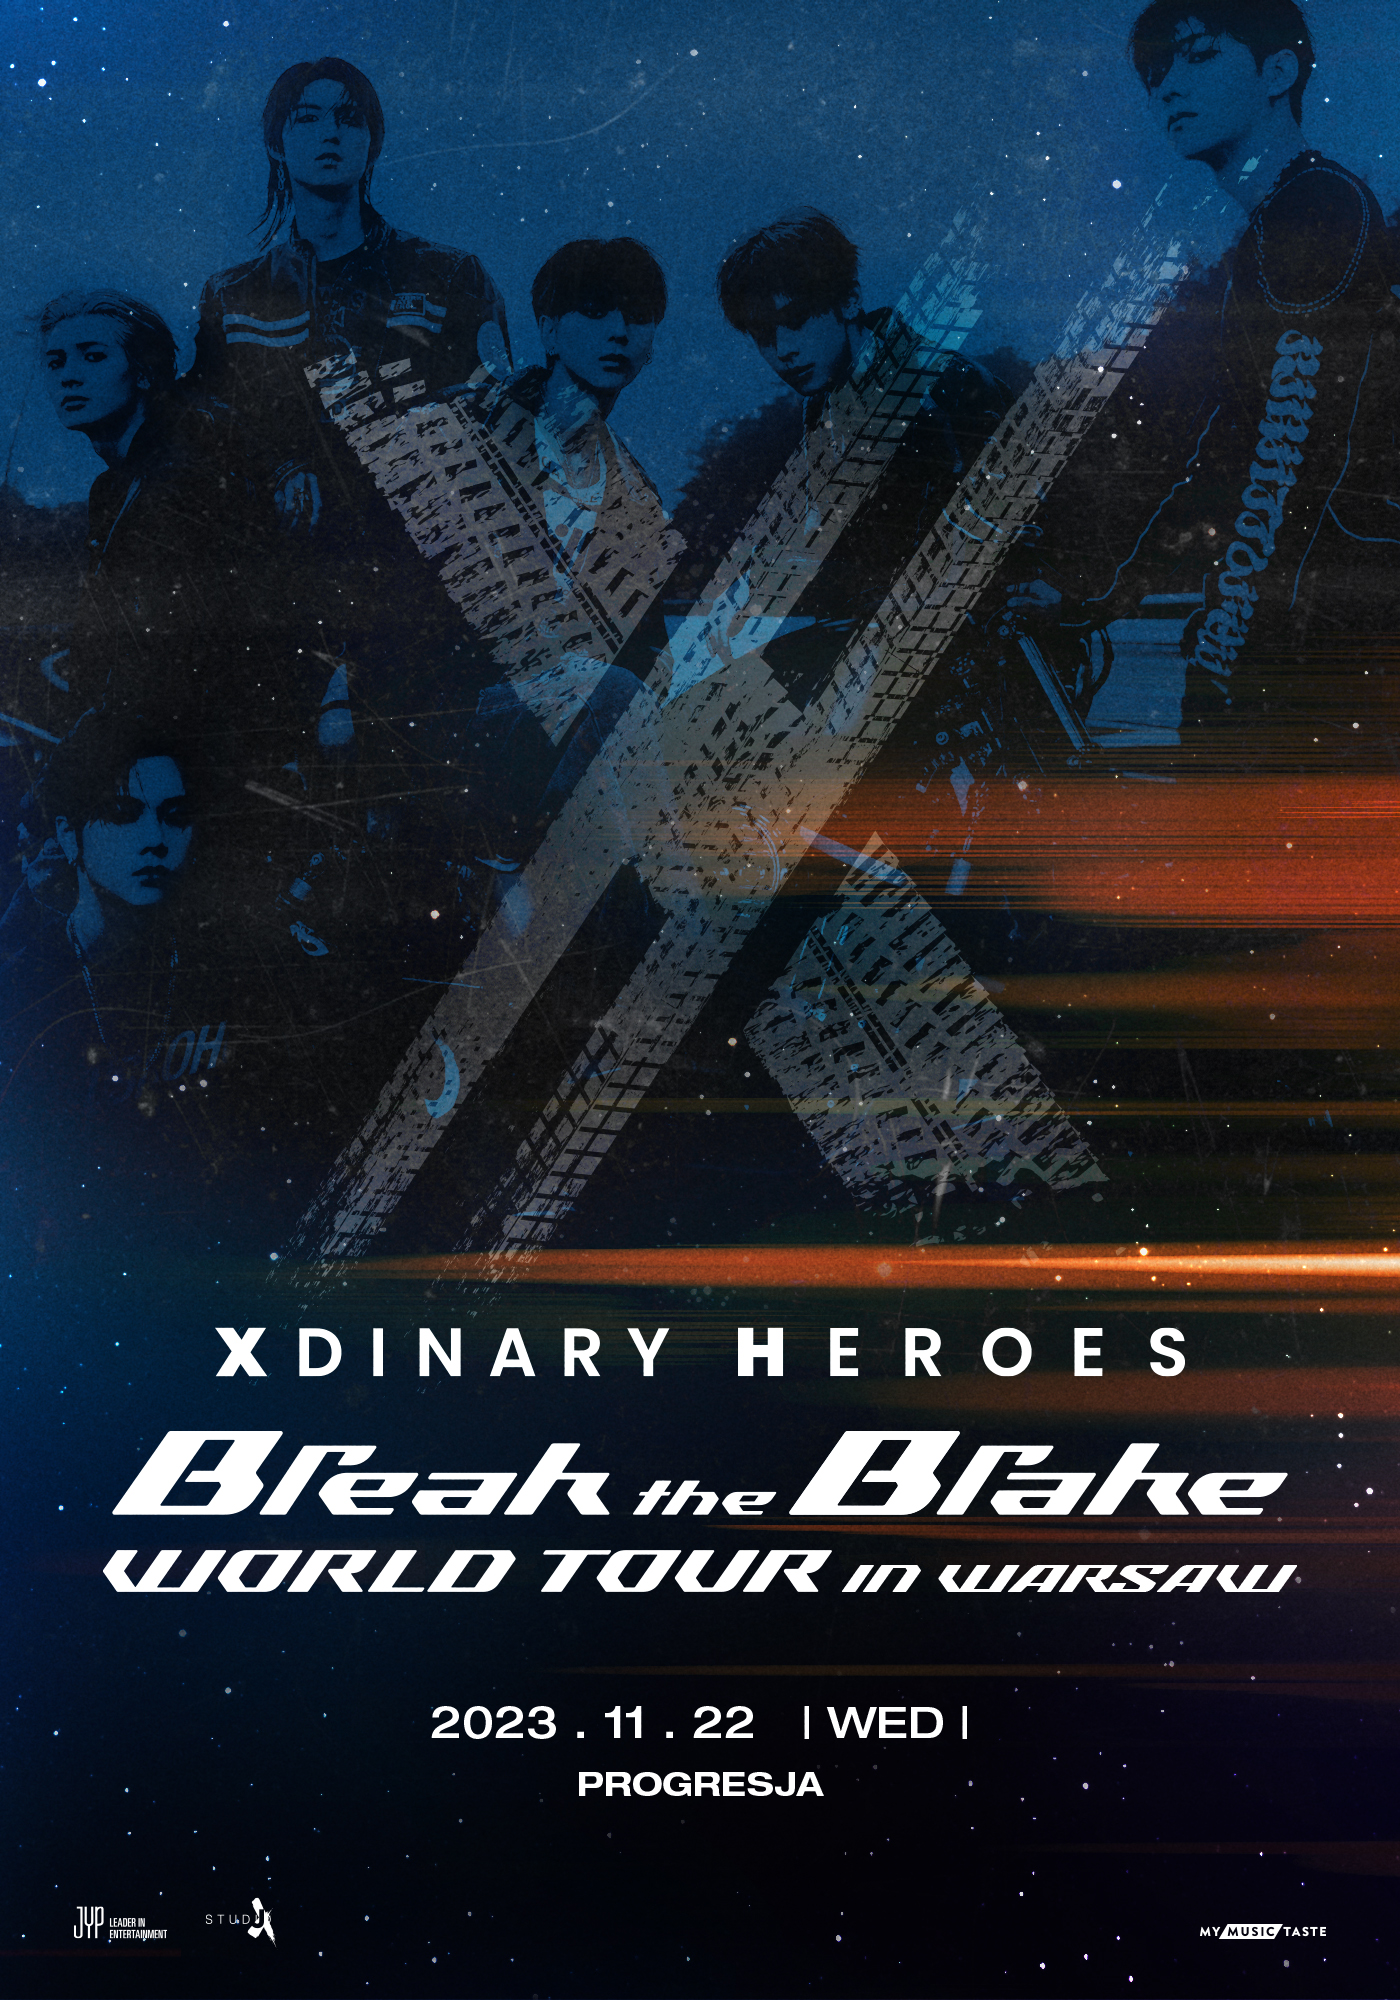 MY MUSIC TASTE PRESENTS: Xdinary Heroes – Break the Brake World Tour in Warsaw